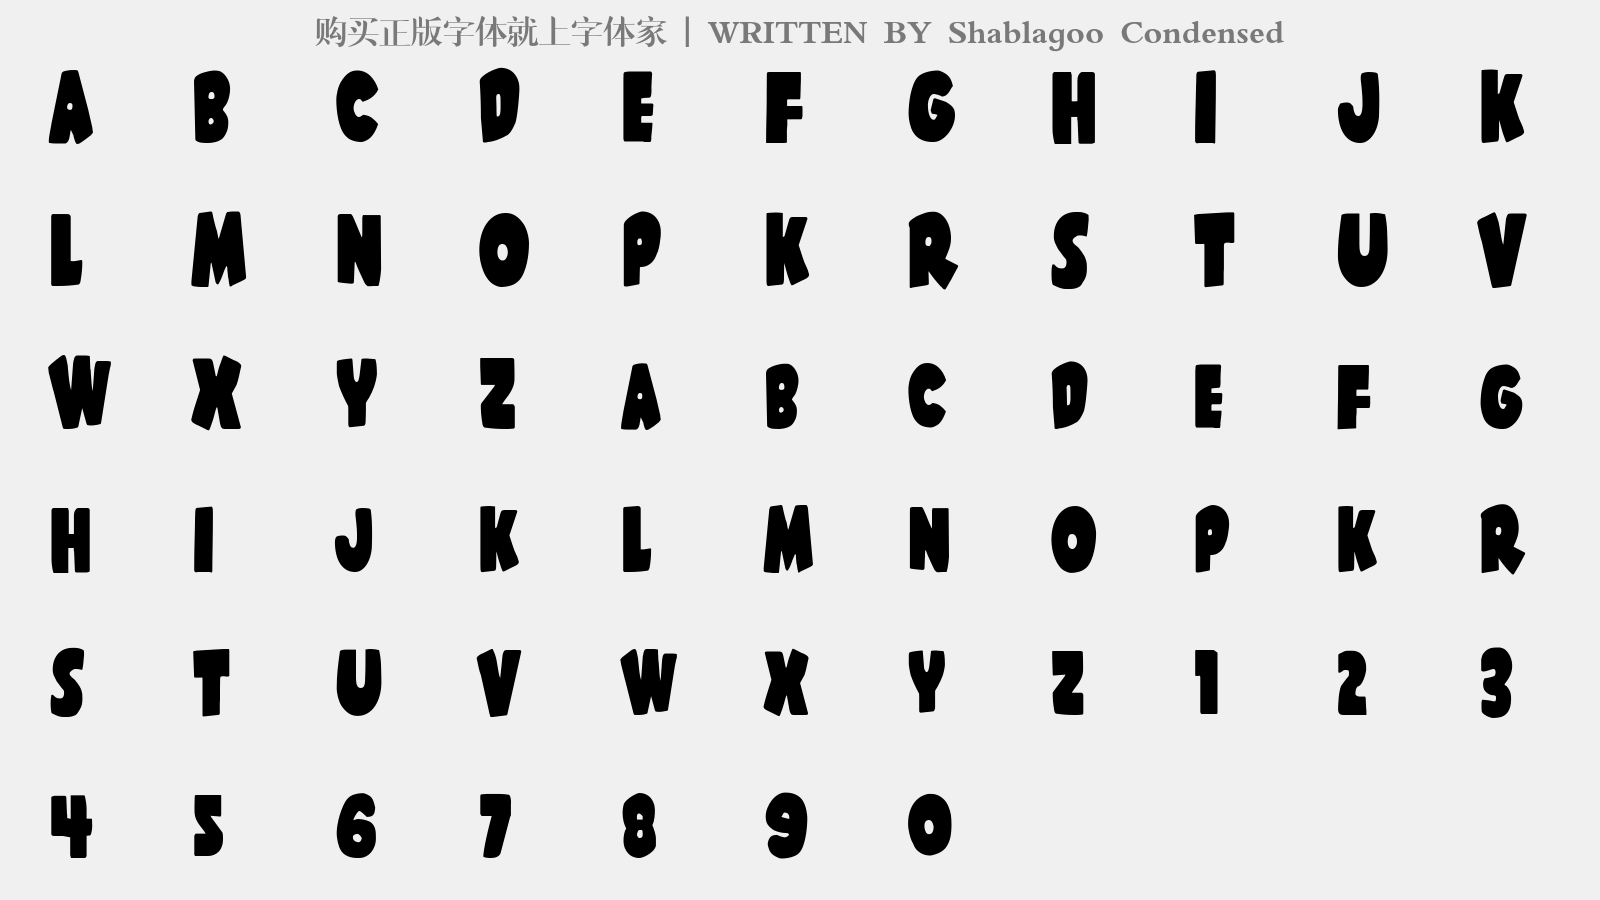 Shablagoo Condensed - 大写字母/小写字母/数字